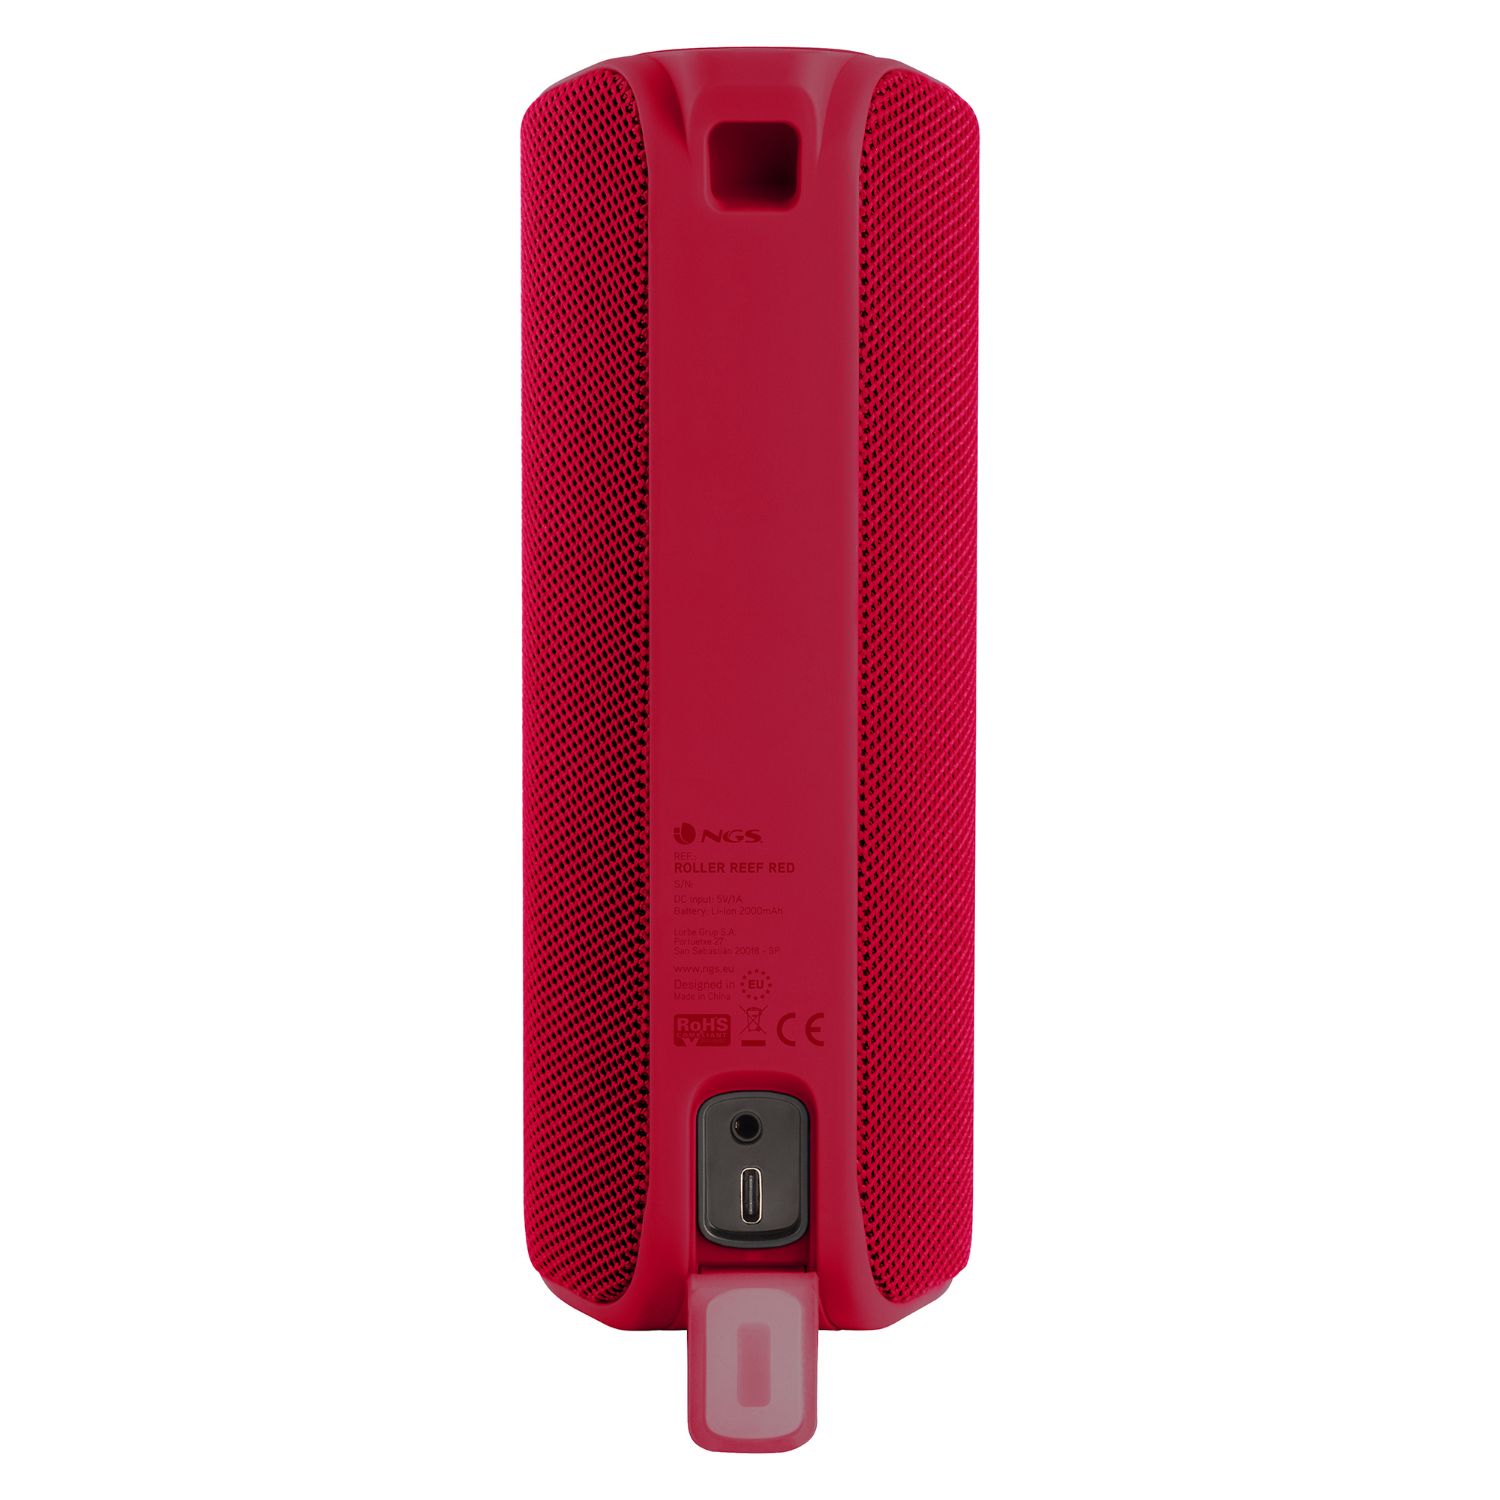 ROLLERREEFRED - Altavoz NGS Wireless 20w Rojo, Waterpoof IP67, compatible con tecnologia T/TWS/ AUX IN. 20horas de bateria (ROLLERREEFRED)